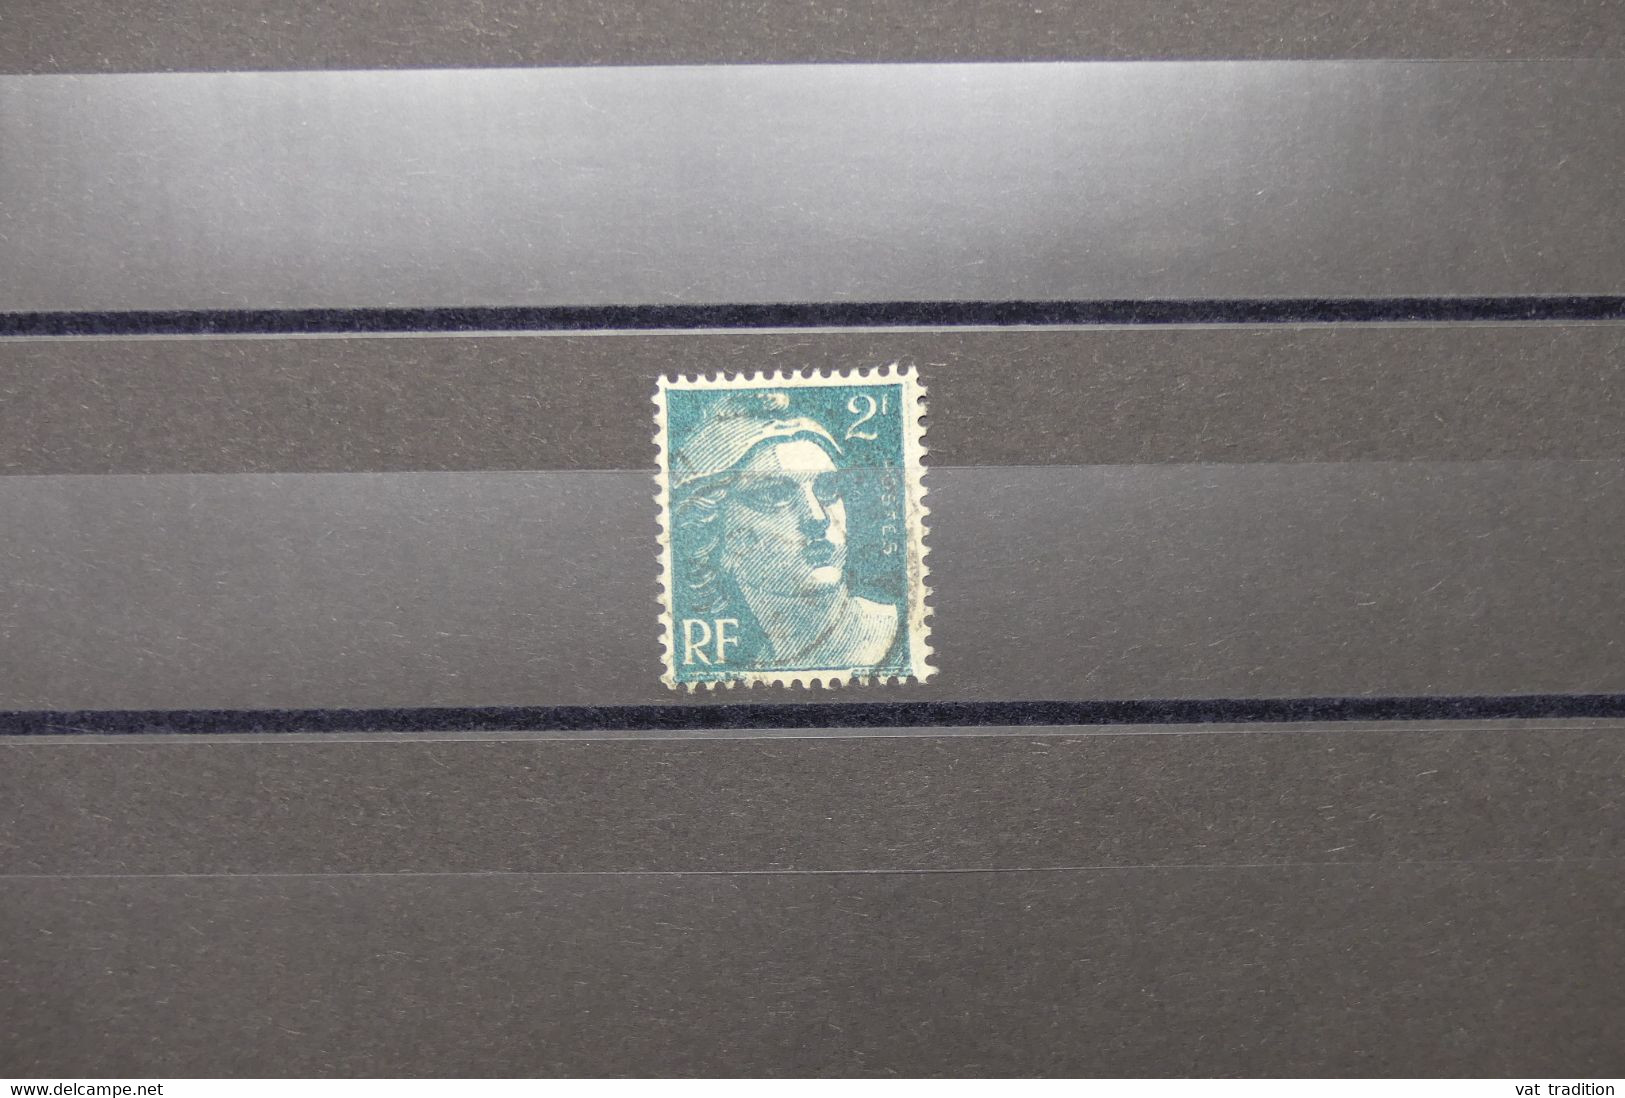 FRANCE - Variété - N° Yvert 713 - Type Gandon - Postes Effacé - Oblitéré  - L 73957 - Used Stamps